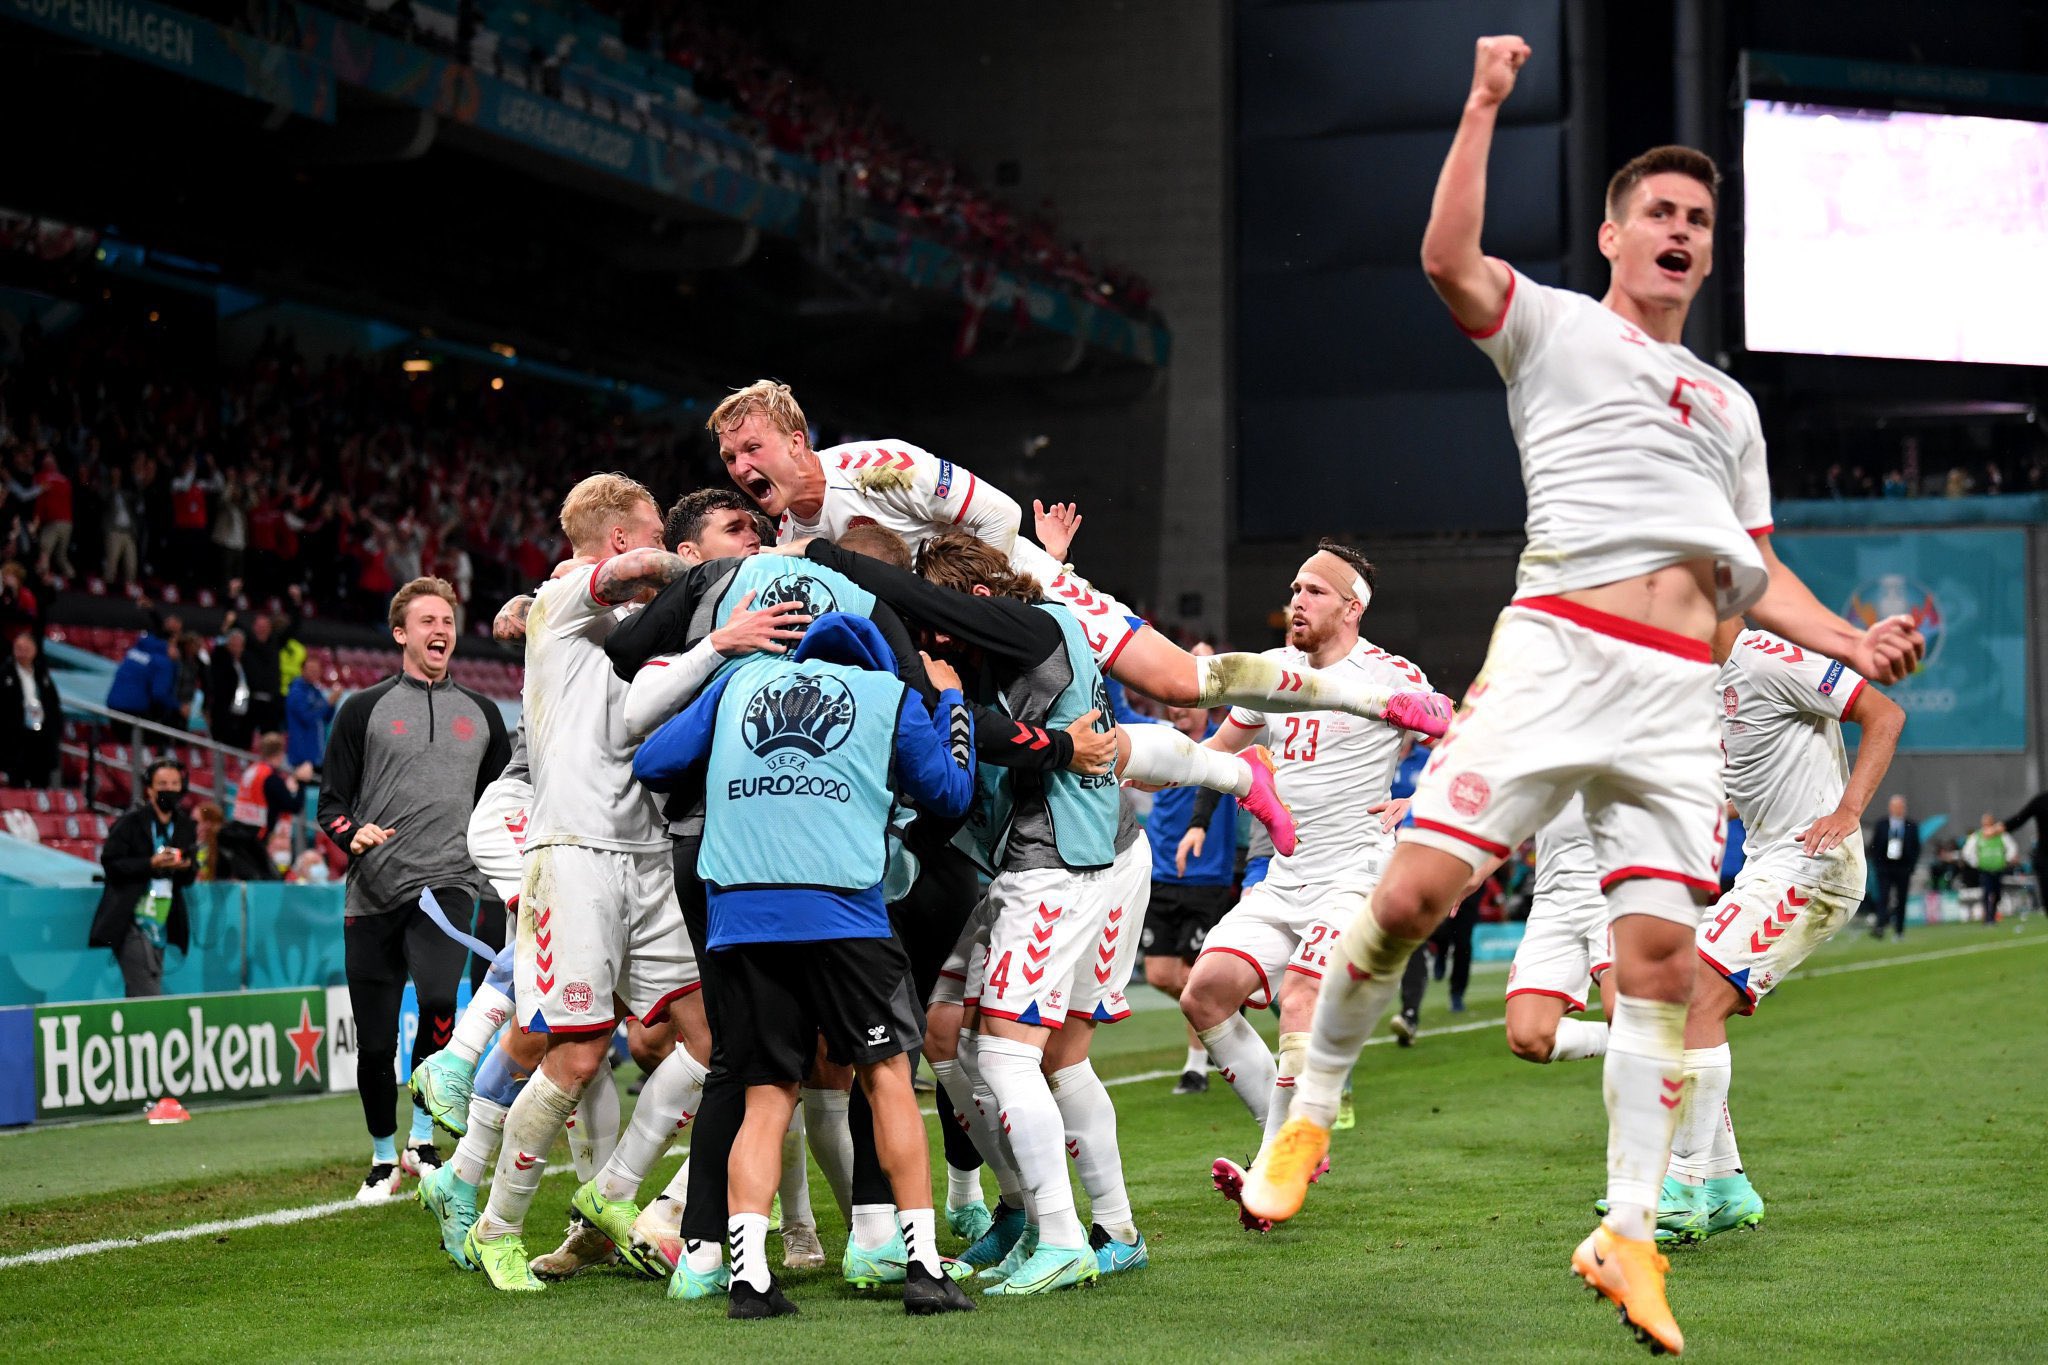 منتخب سويسرا يتأهل لربع نهائي يورو 2020 على حساب فرنسا 